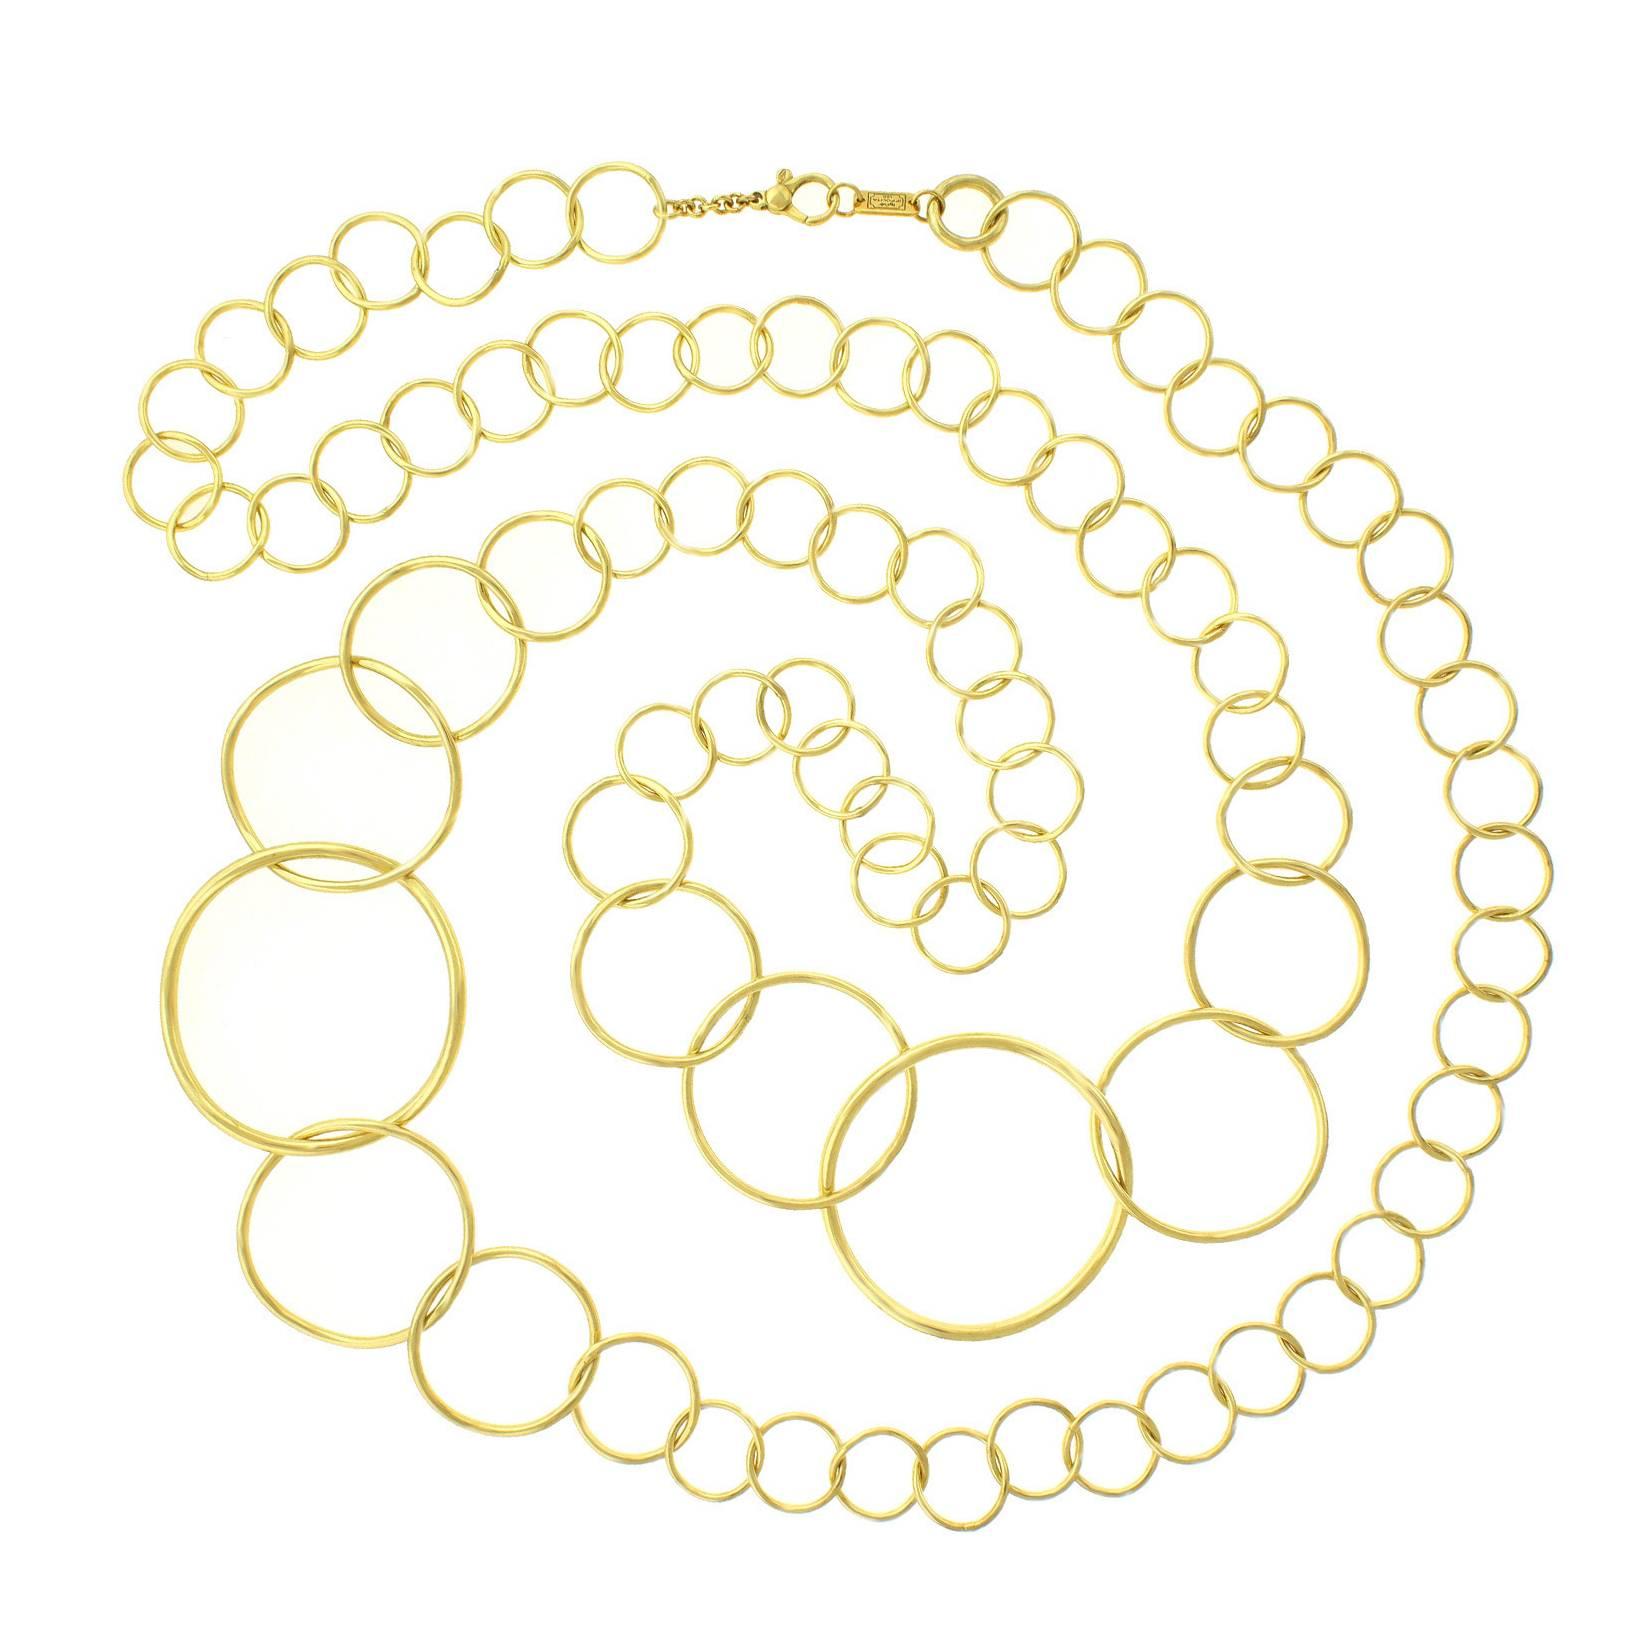 Spectacular Ippolita Extra Long "Glamazon" Gold Necklace